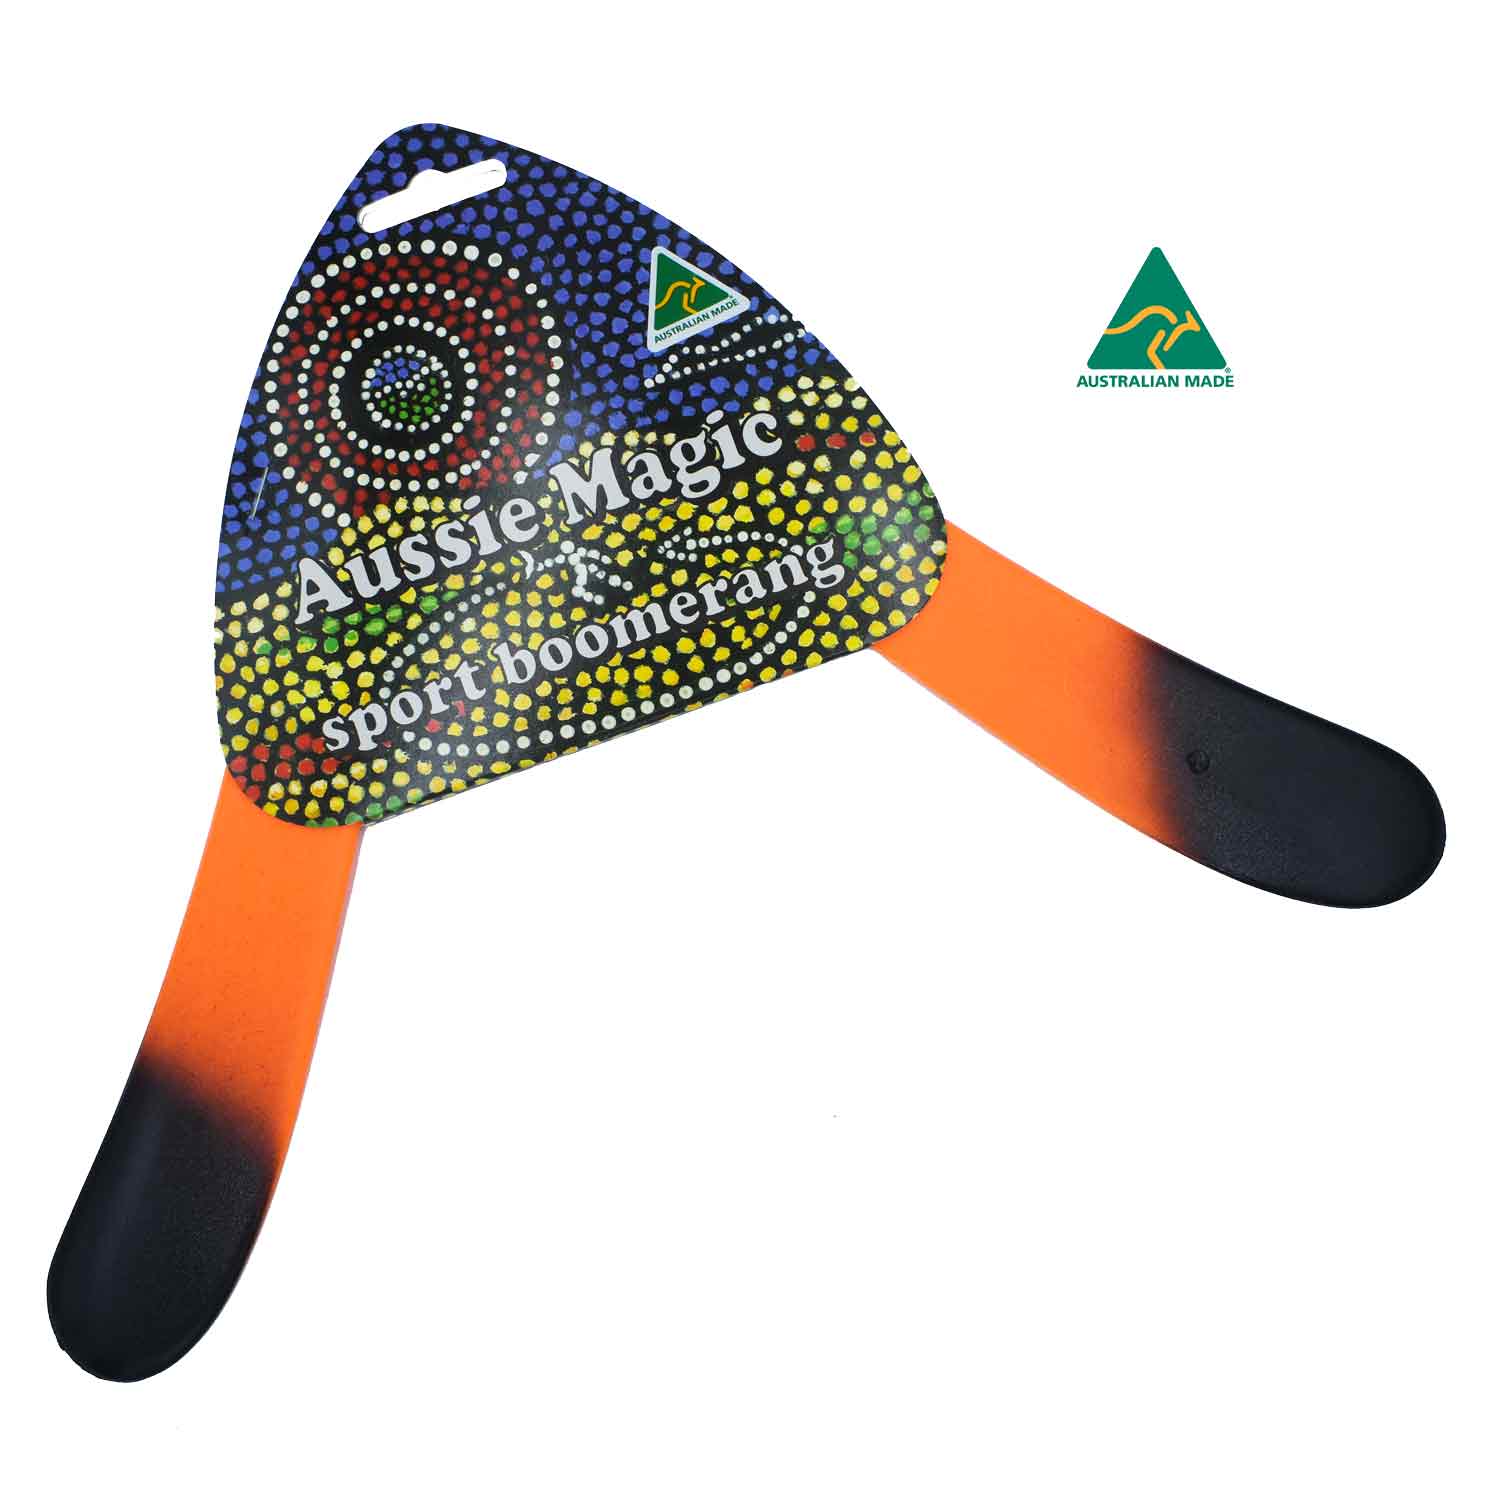 Aussie Magic Sport Boomerang Orange colour